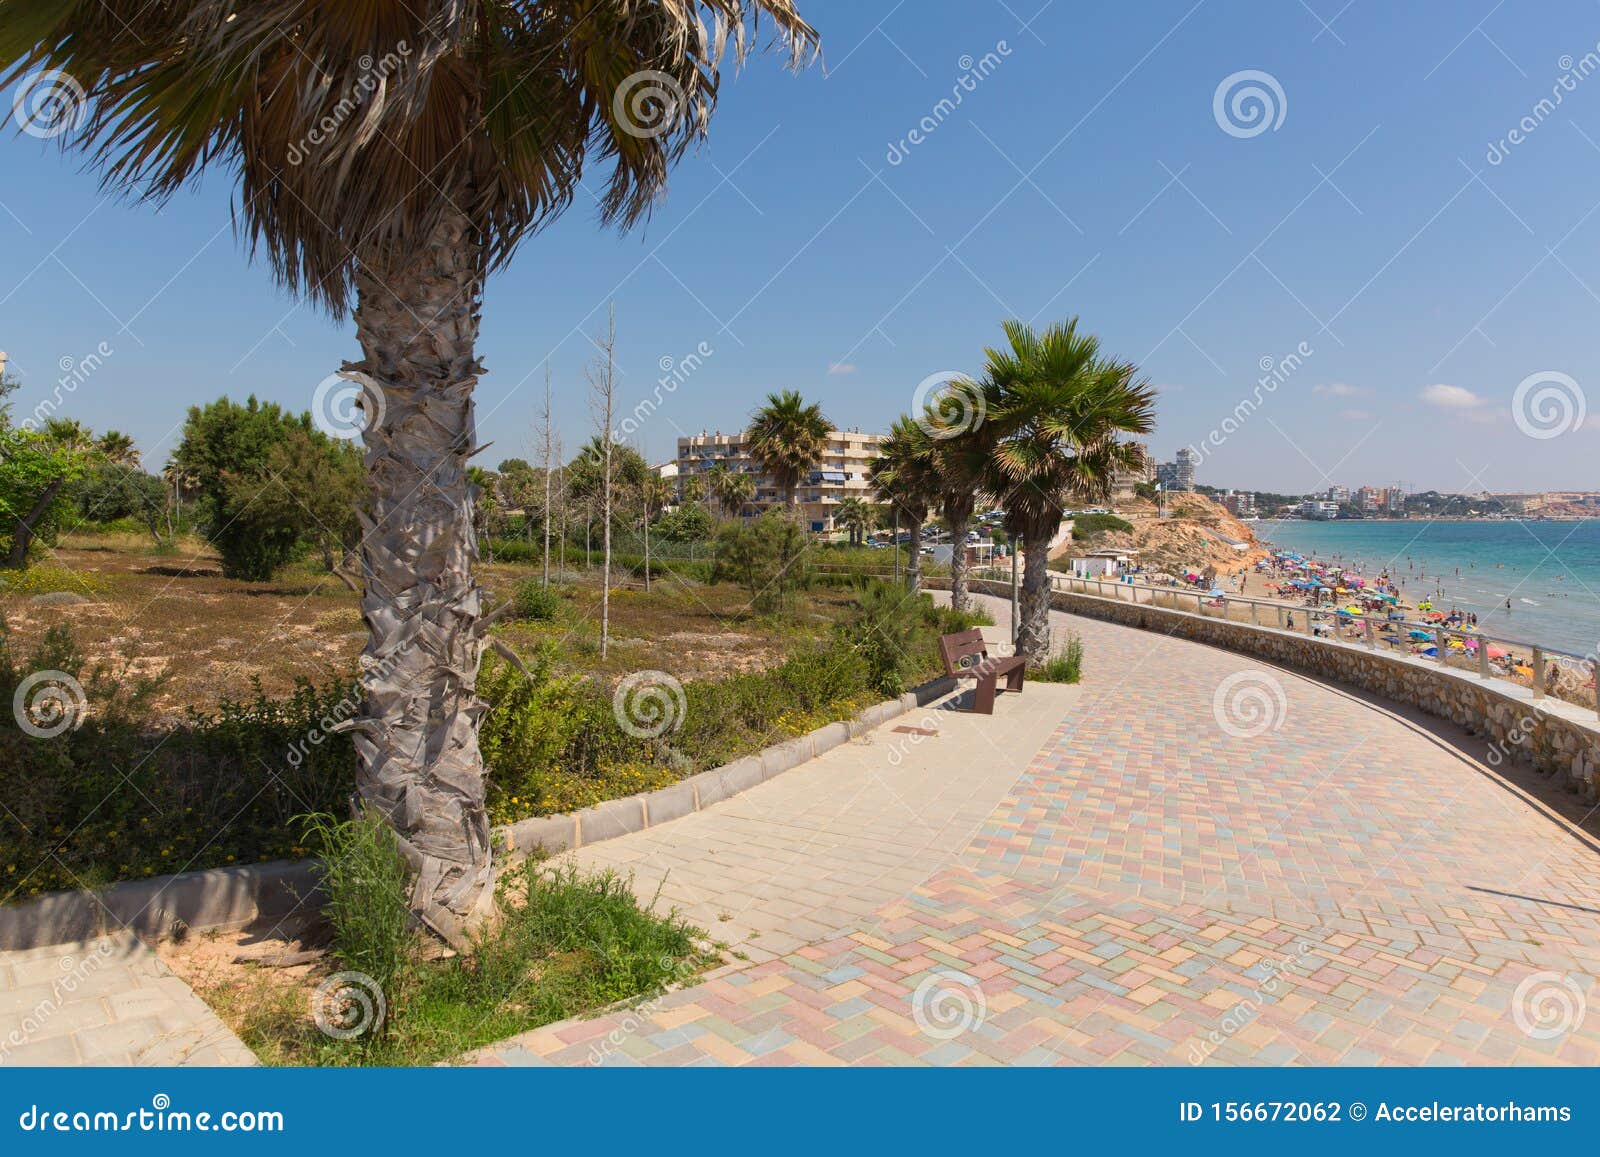 palm trees mil palmeras costa blanca spain on promenade paseo leading to the beach